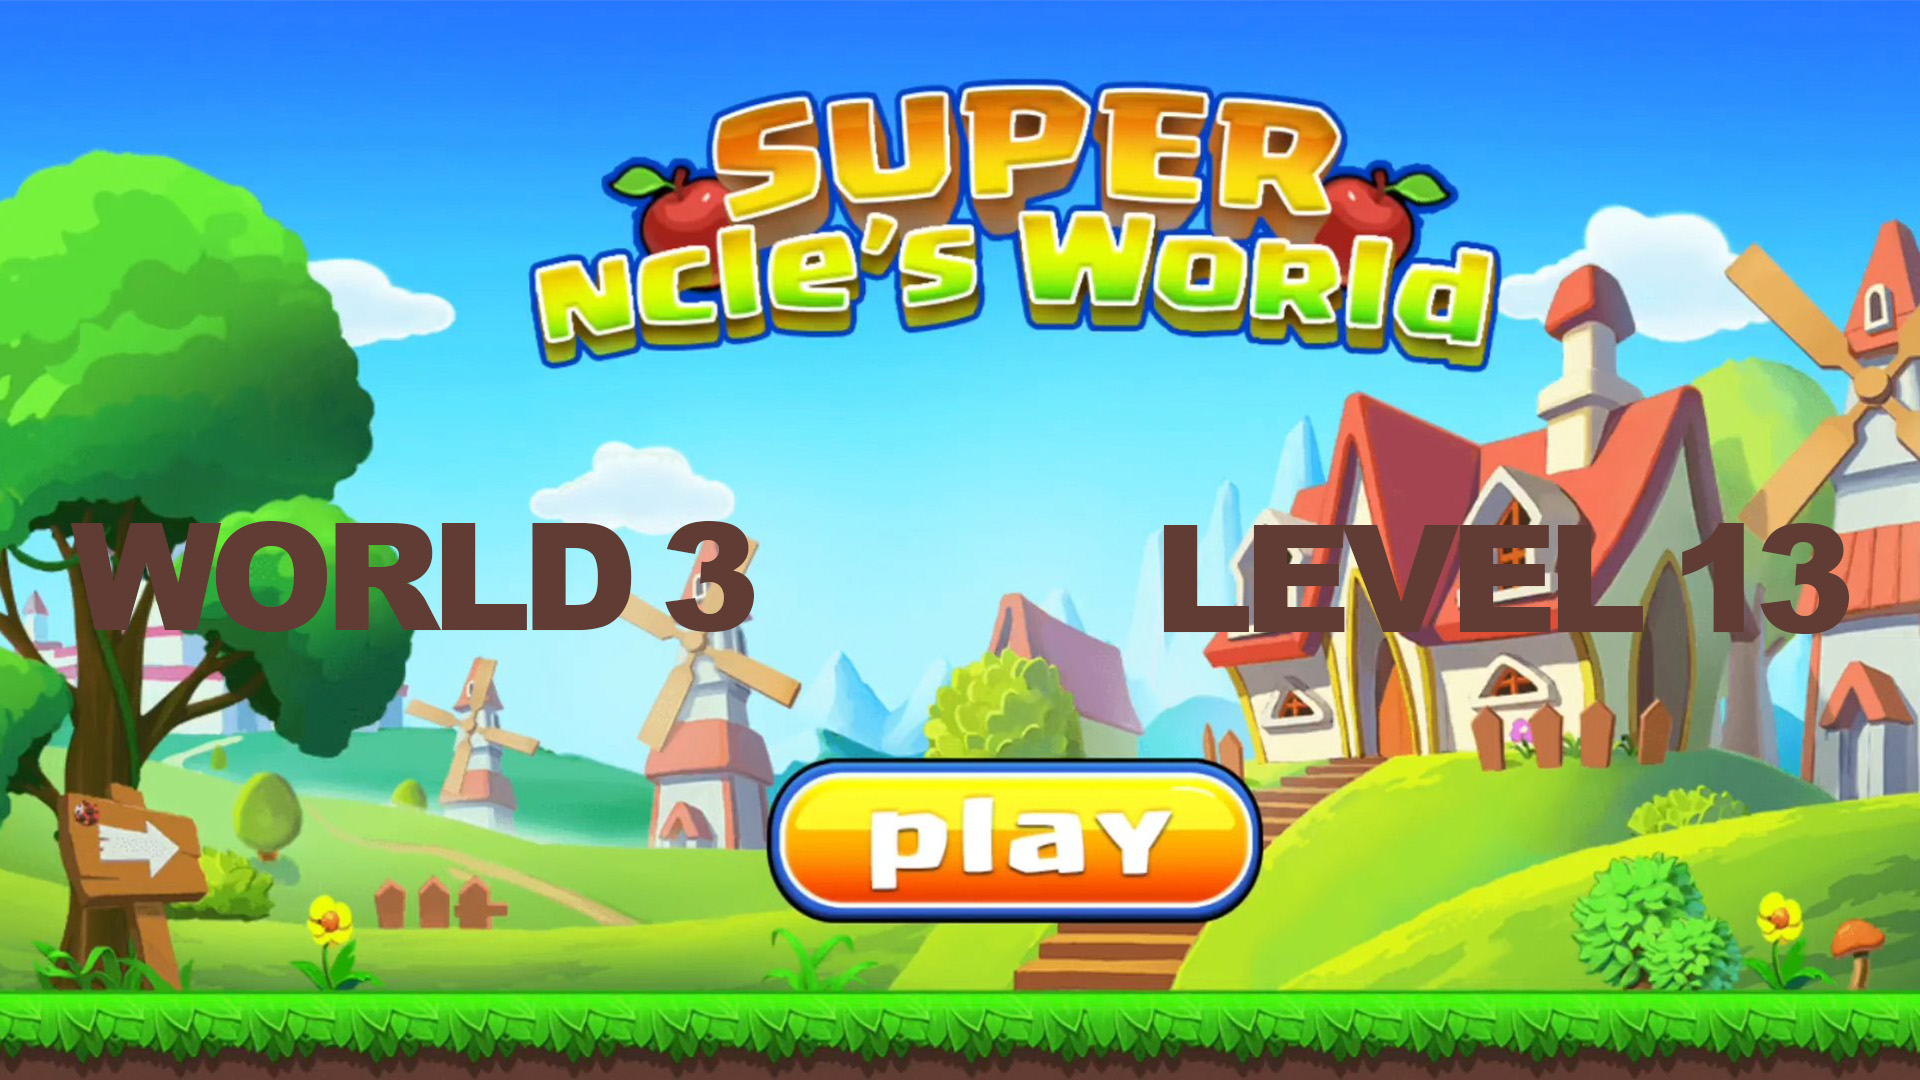 Super ncle's  World 3. Level 13.